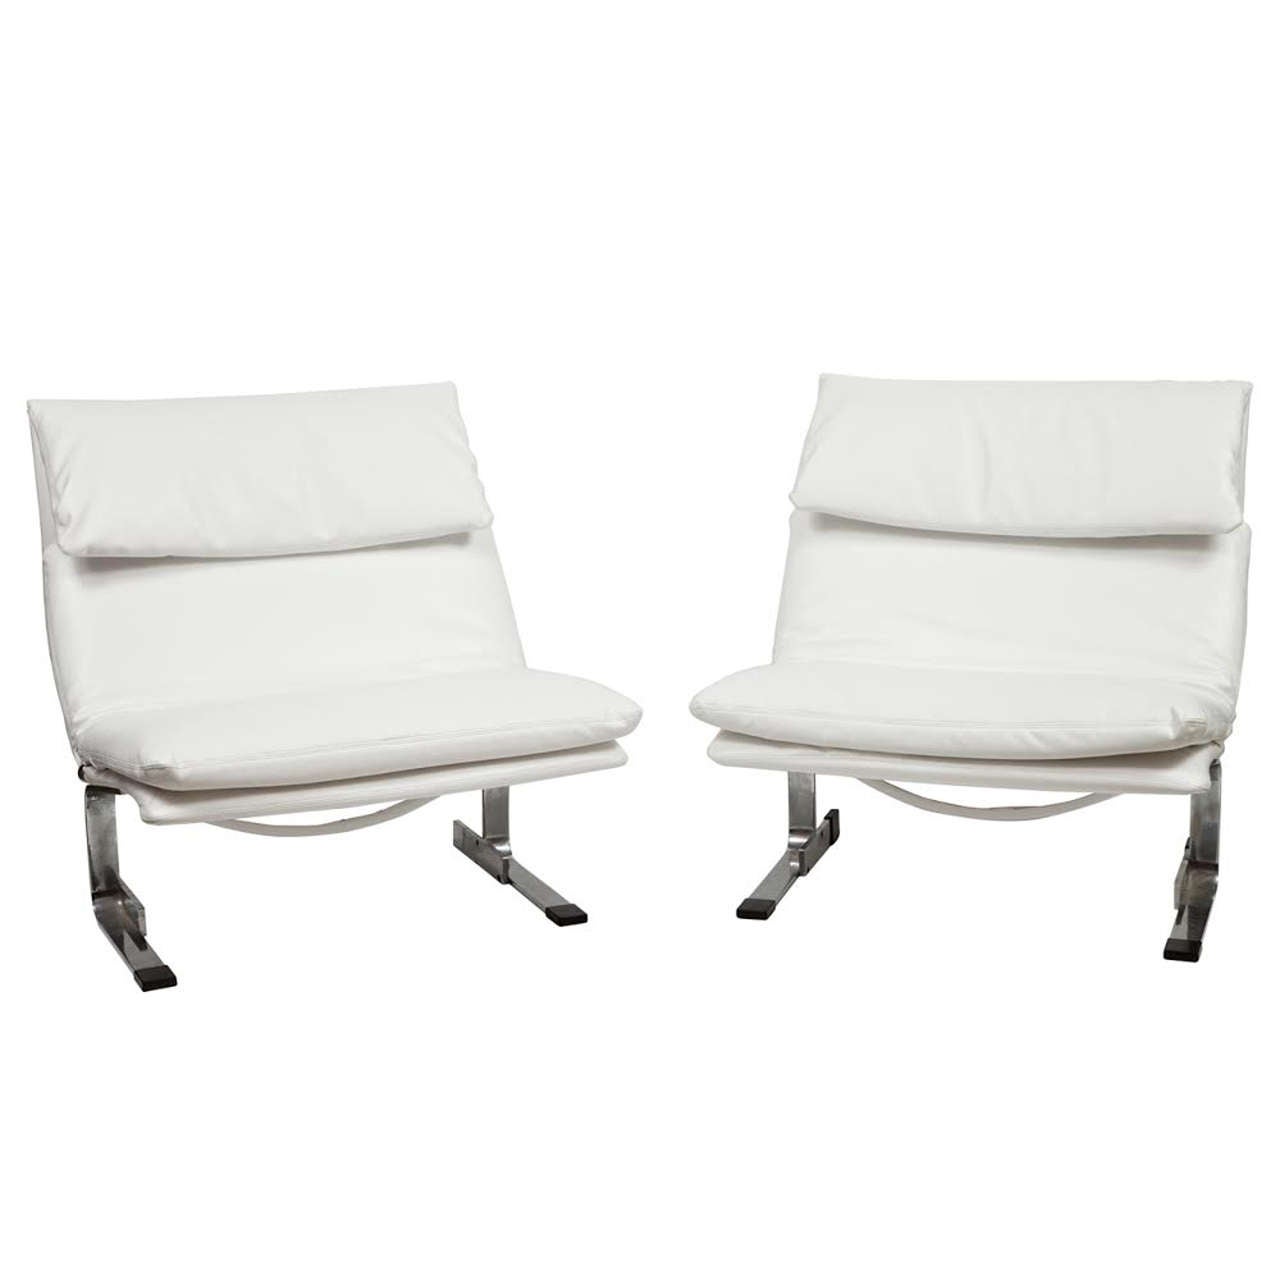 Pair of Saporiti Italia "Onda" Lounge Chairs, Signed